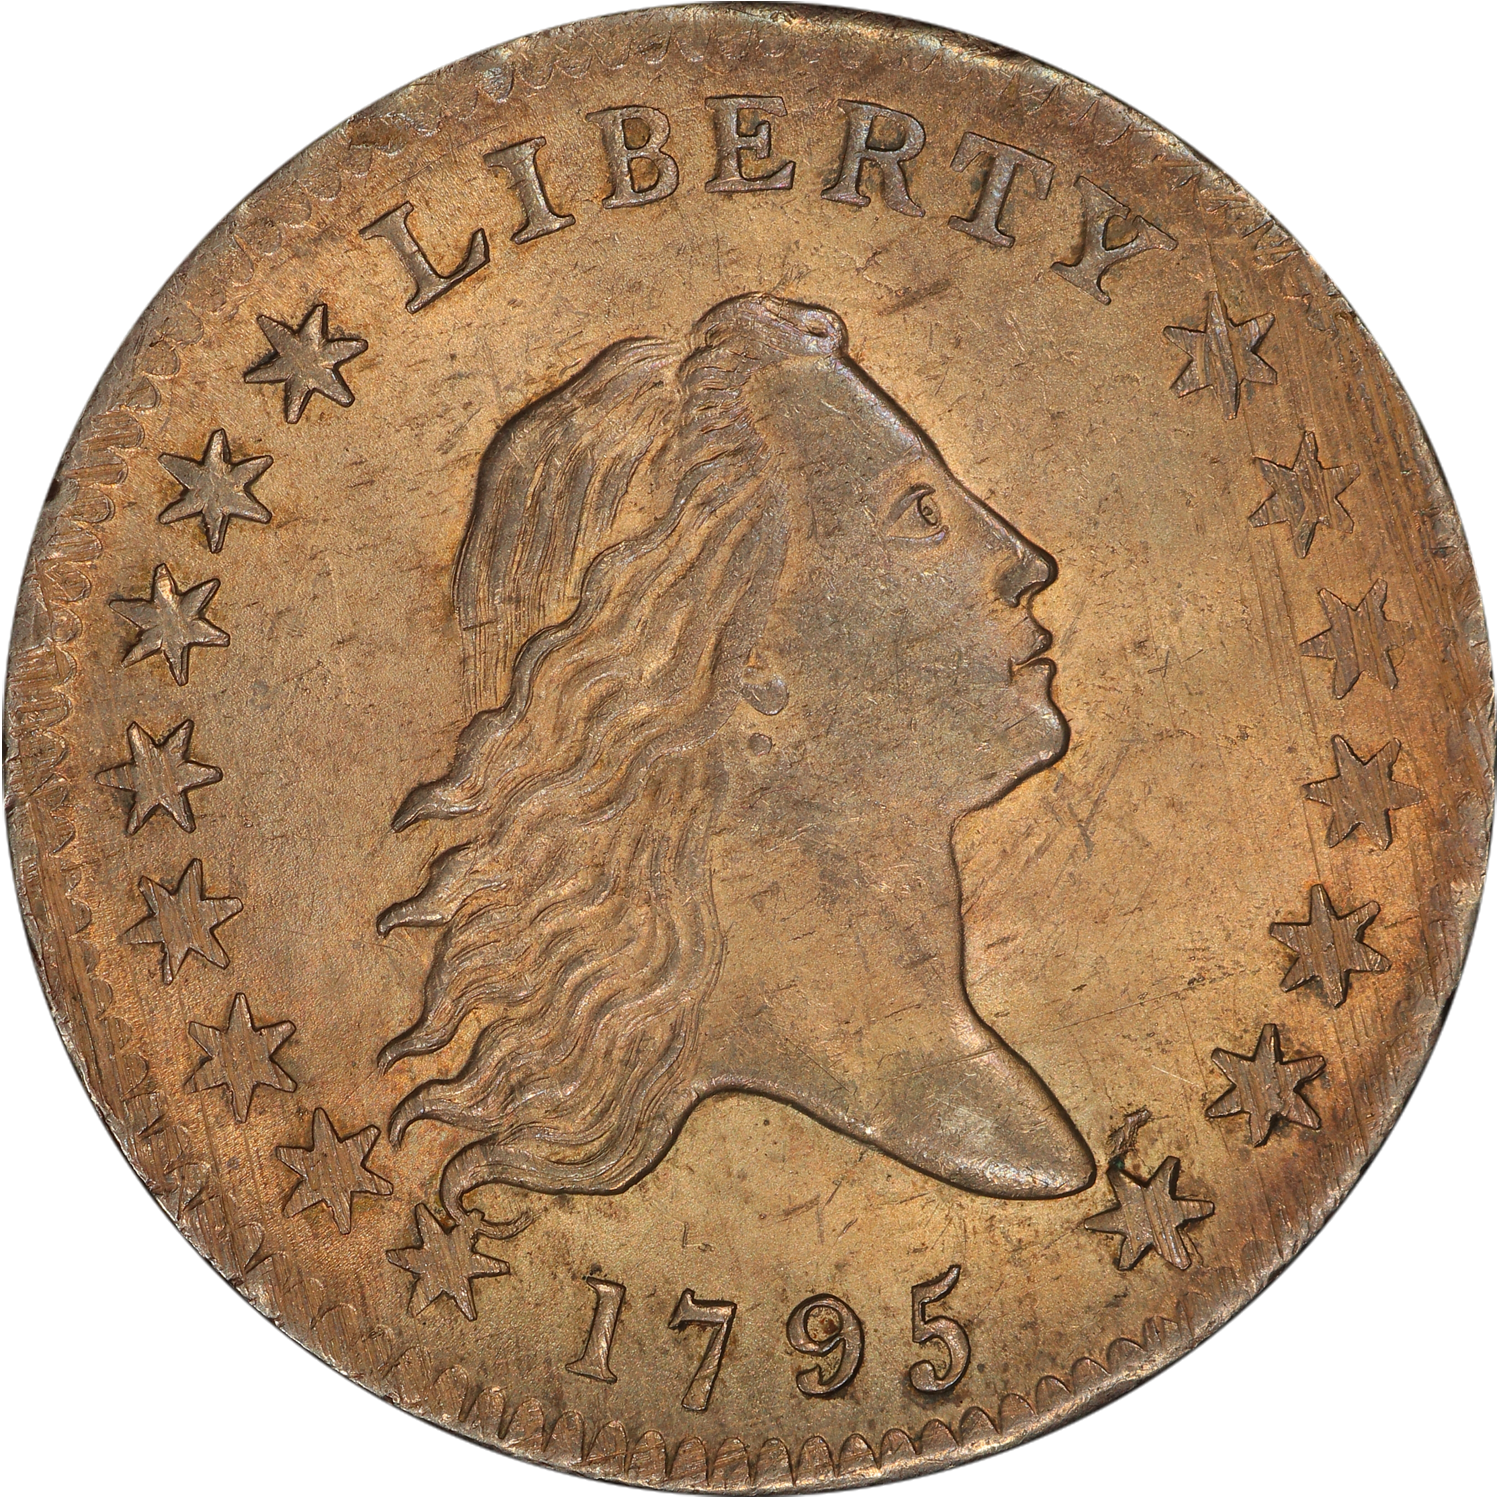 1795 two leaves flowing hair silver half dollar